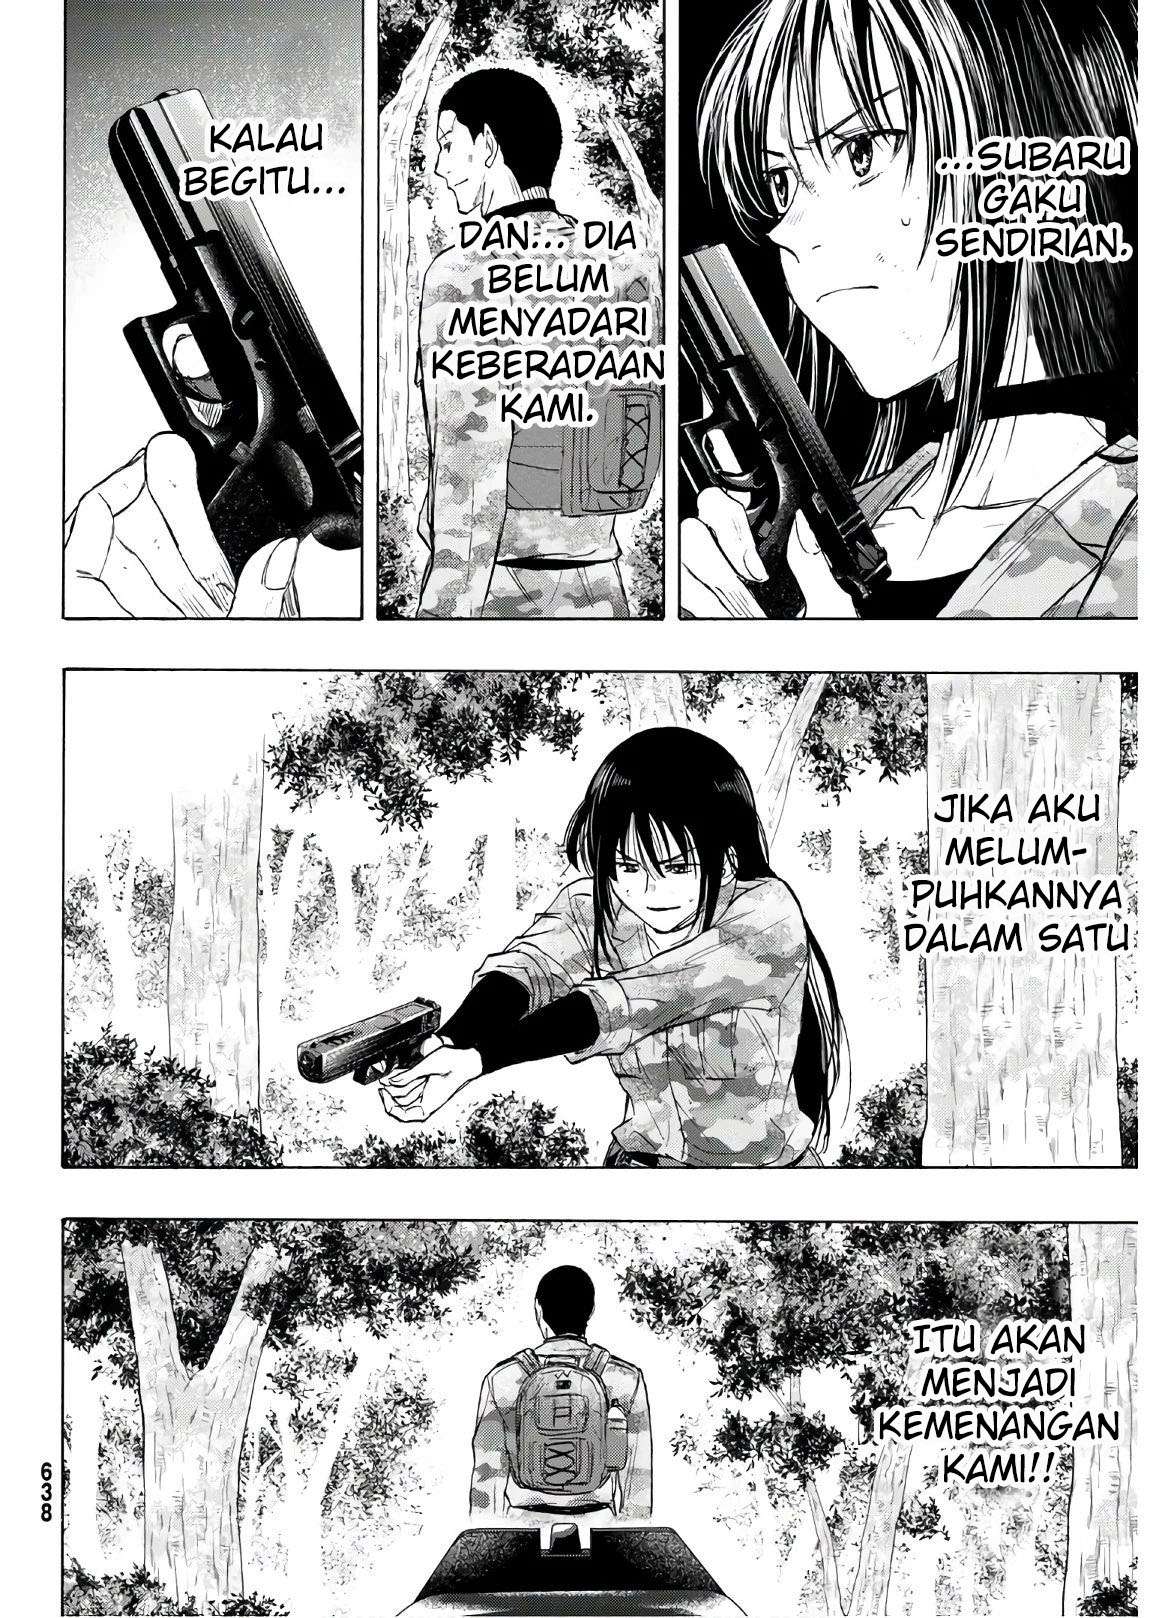 Tomodachi Game Chapter 81 Bahasa Indonesia